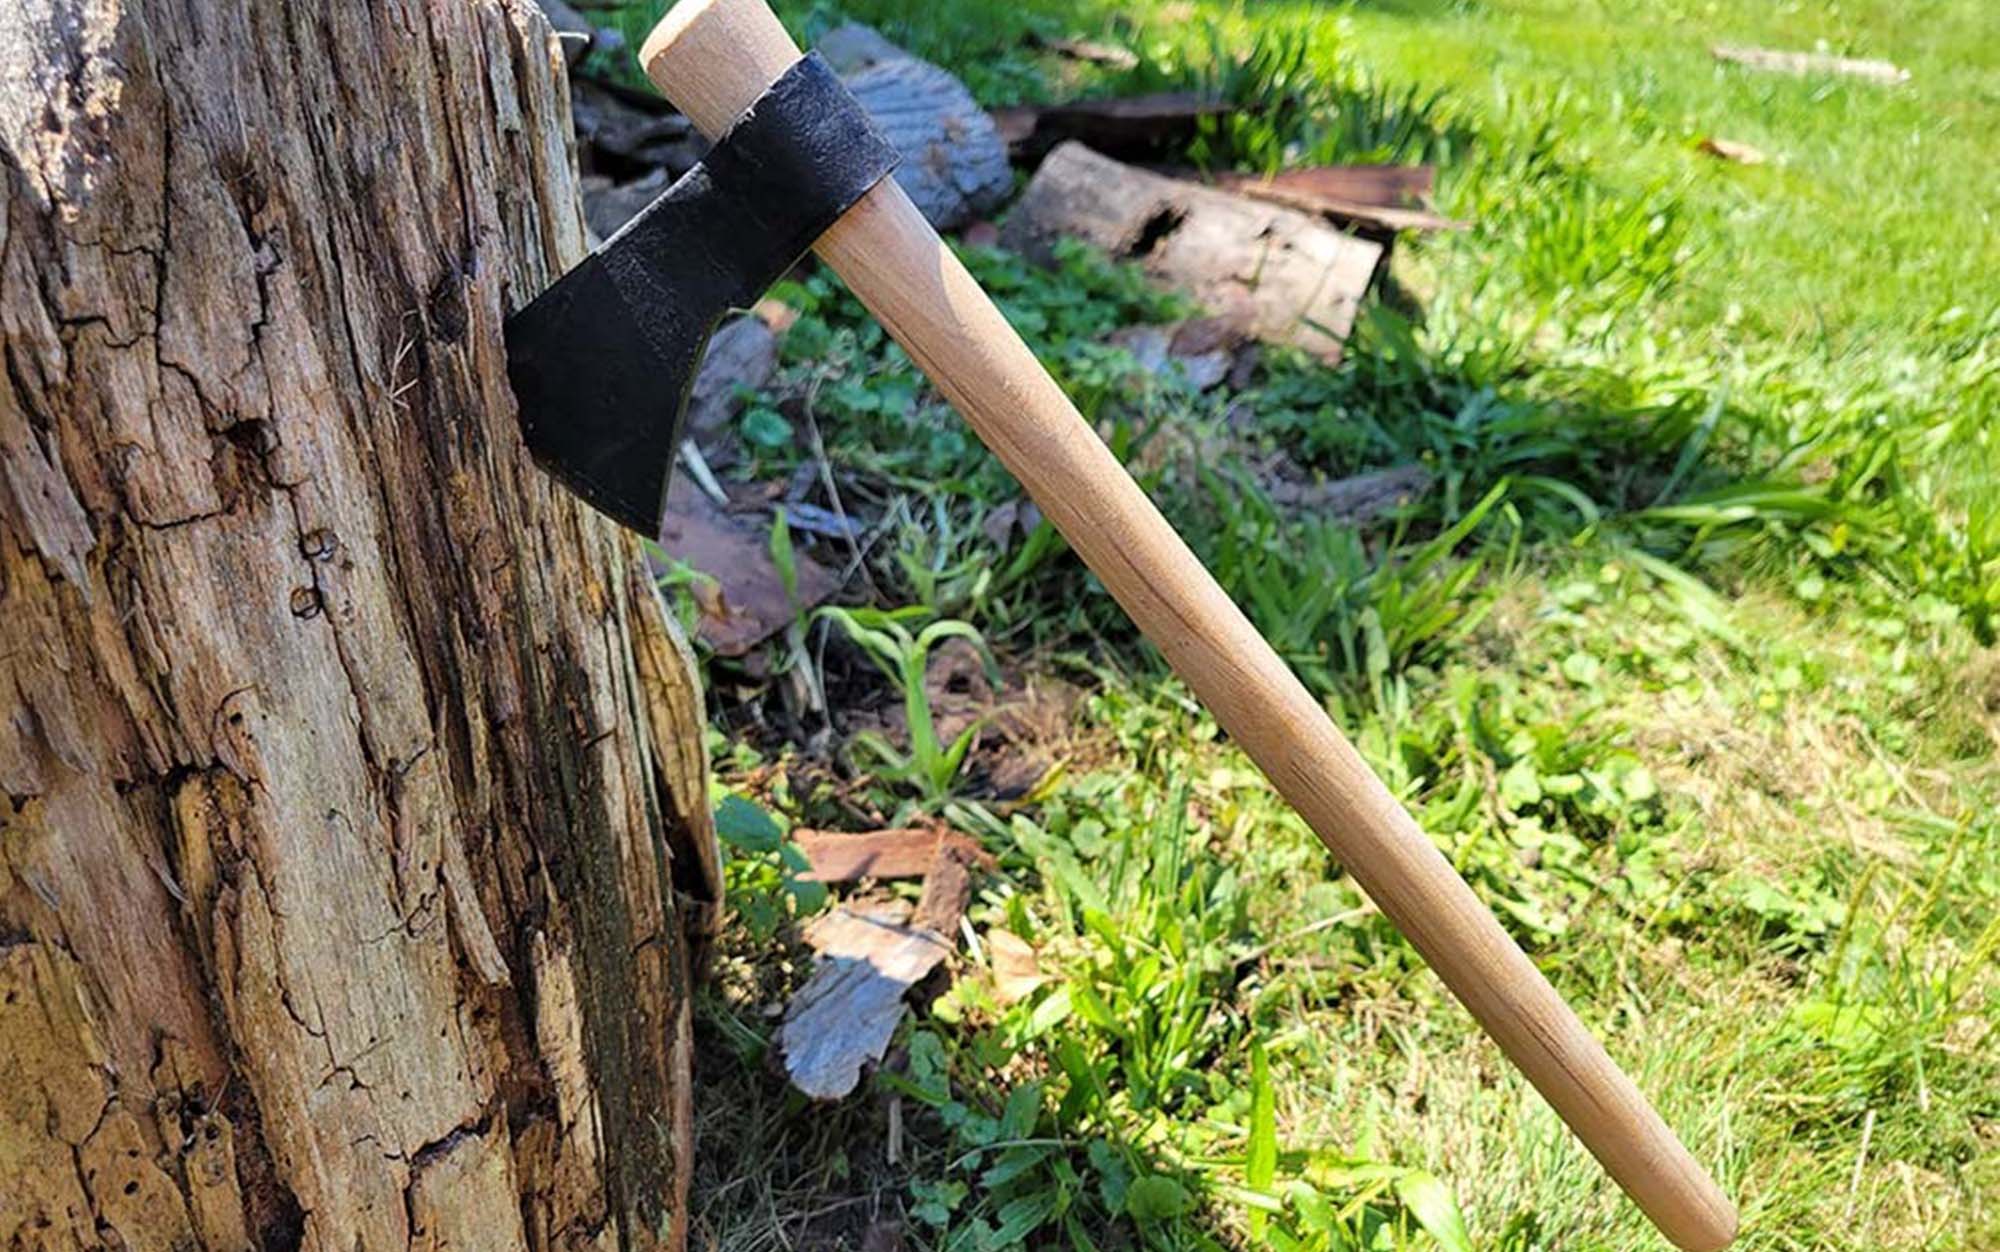 Mouse Hawk tomahawk stuck into a tree stump.